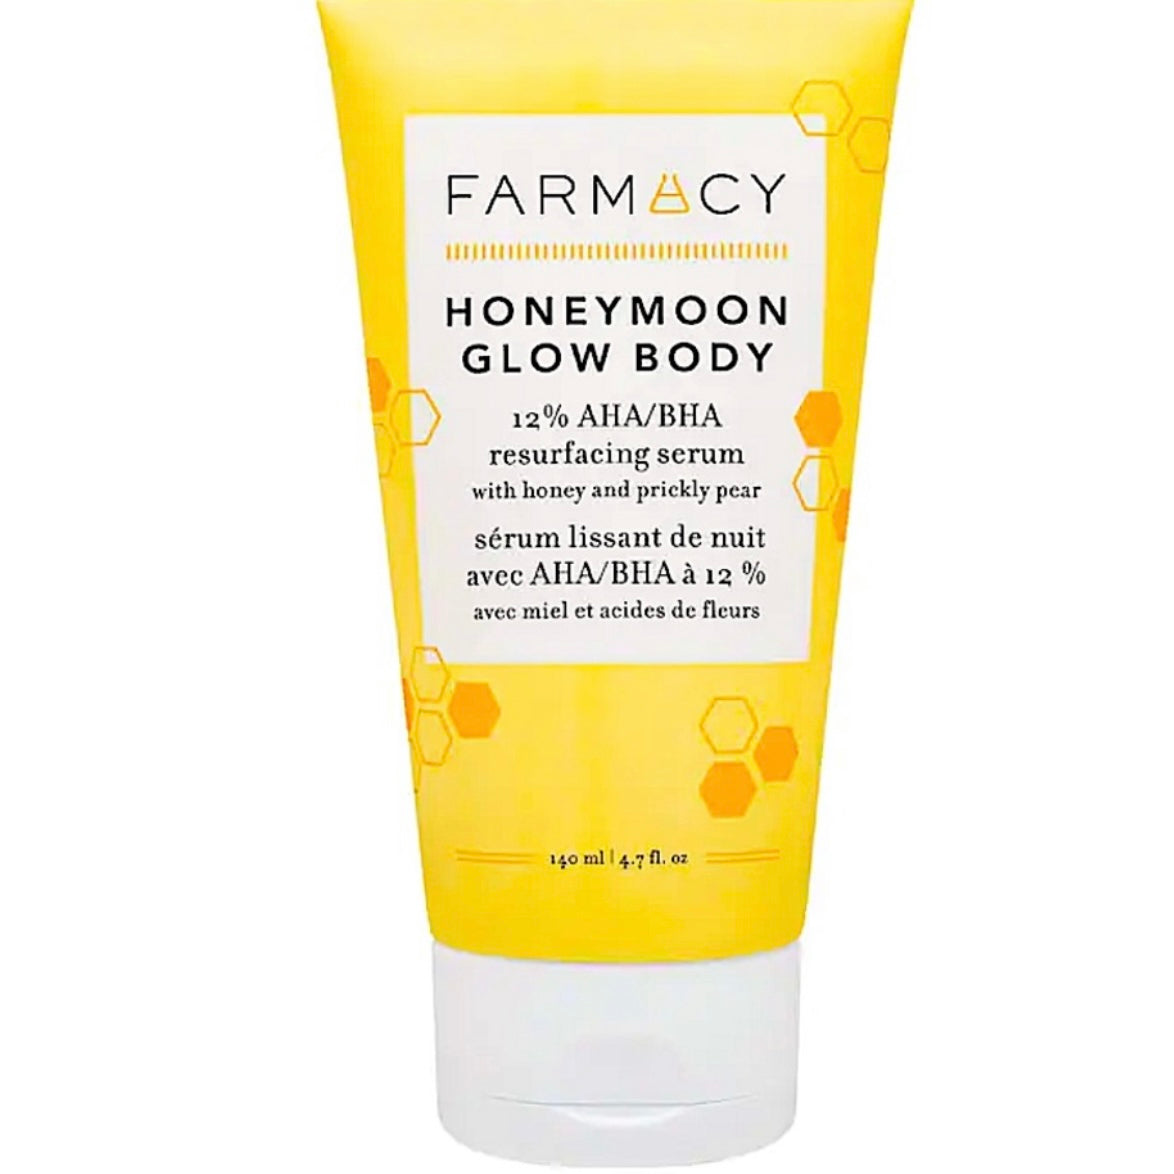 Farmacy Honeymoon Glow Body AHA/BHA Resurfacing Serum | Full size 4.7 oz.